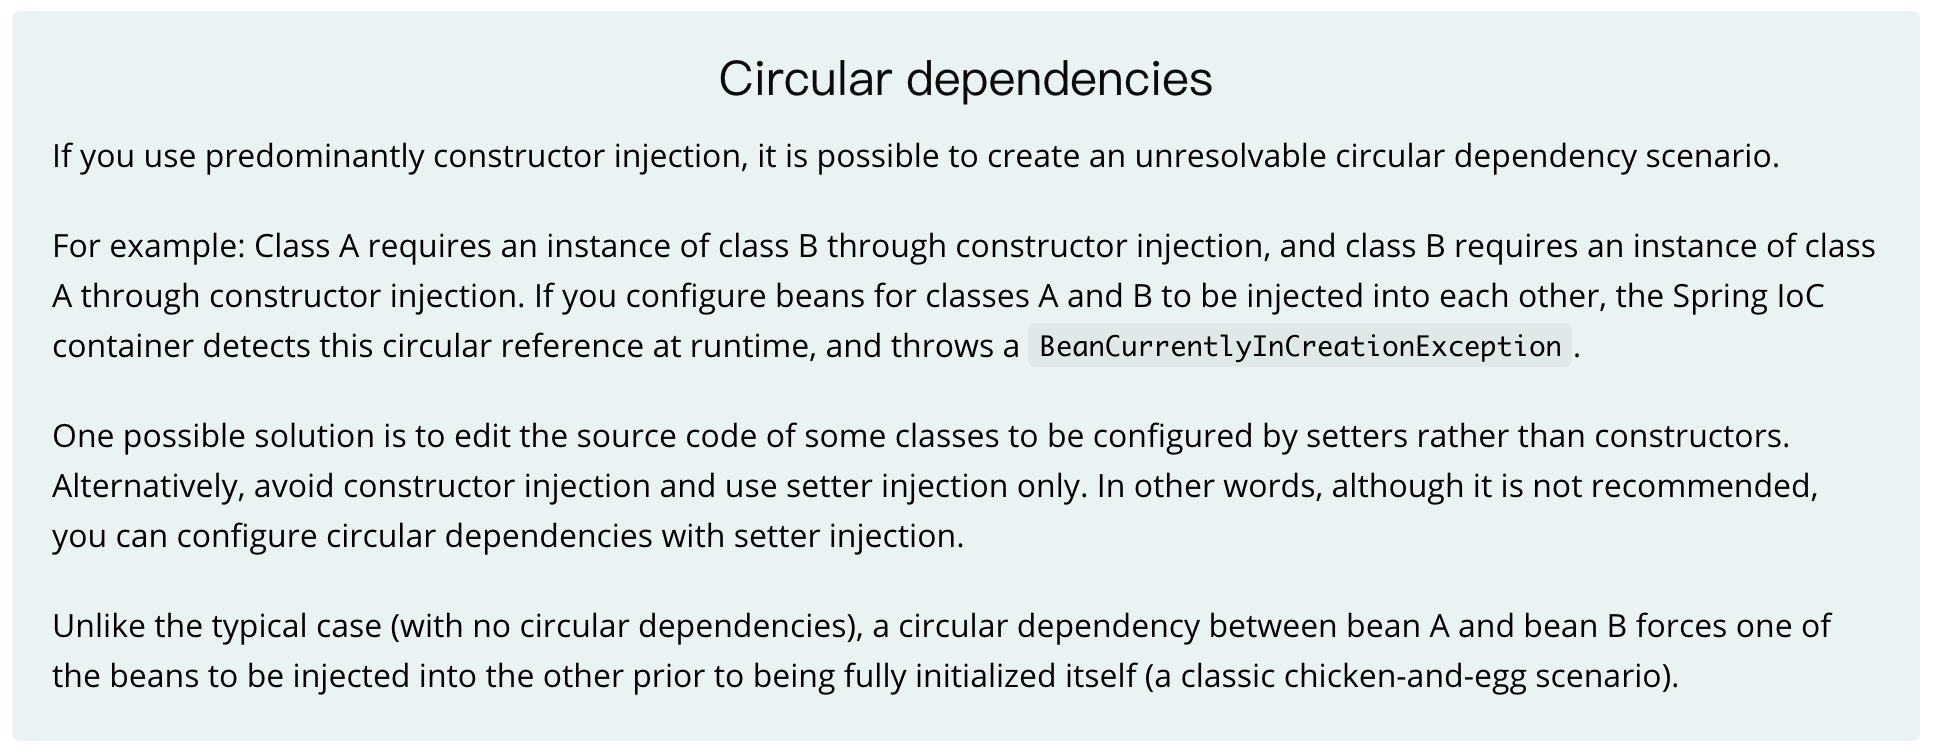 Circular dependencies